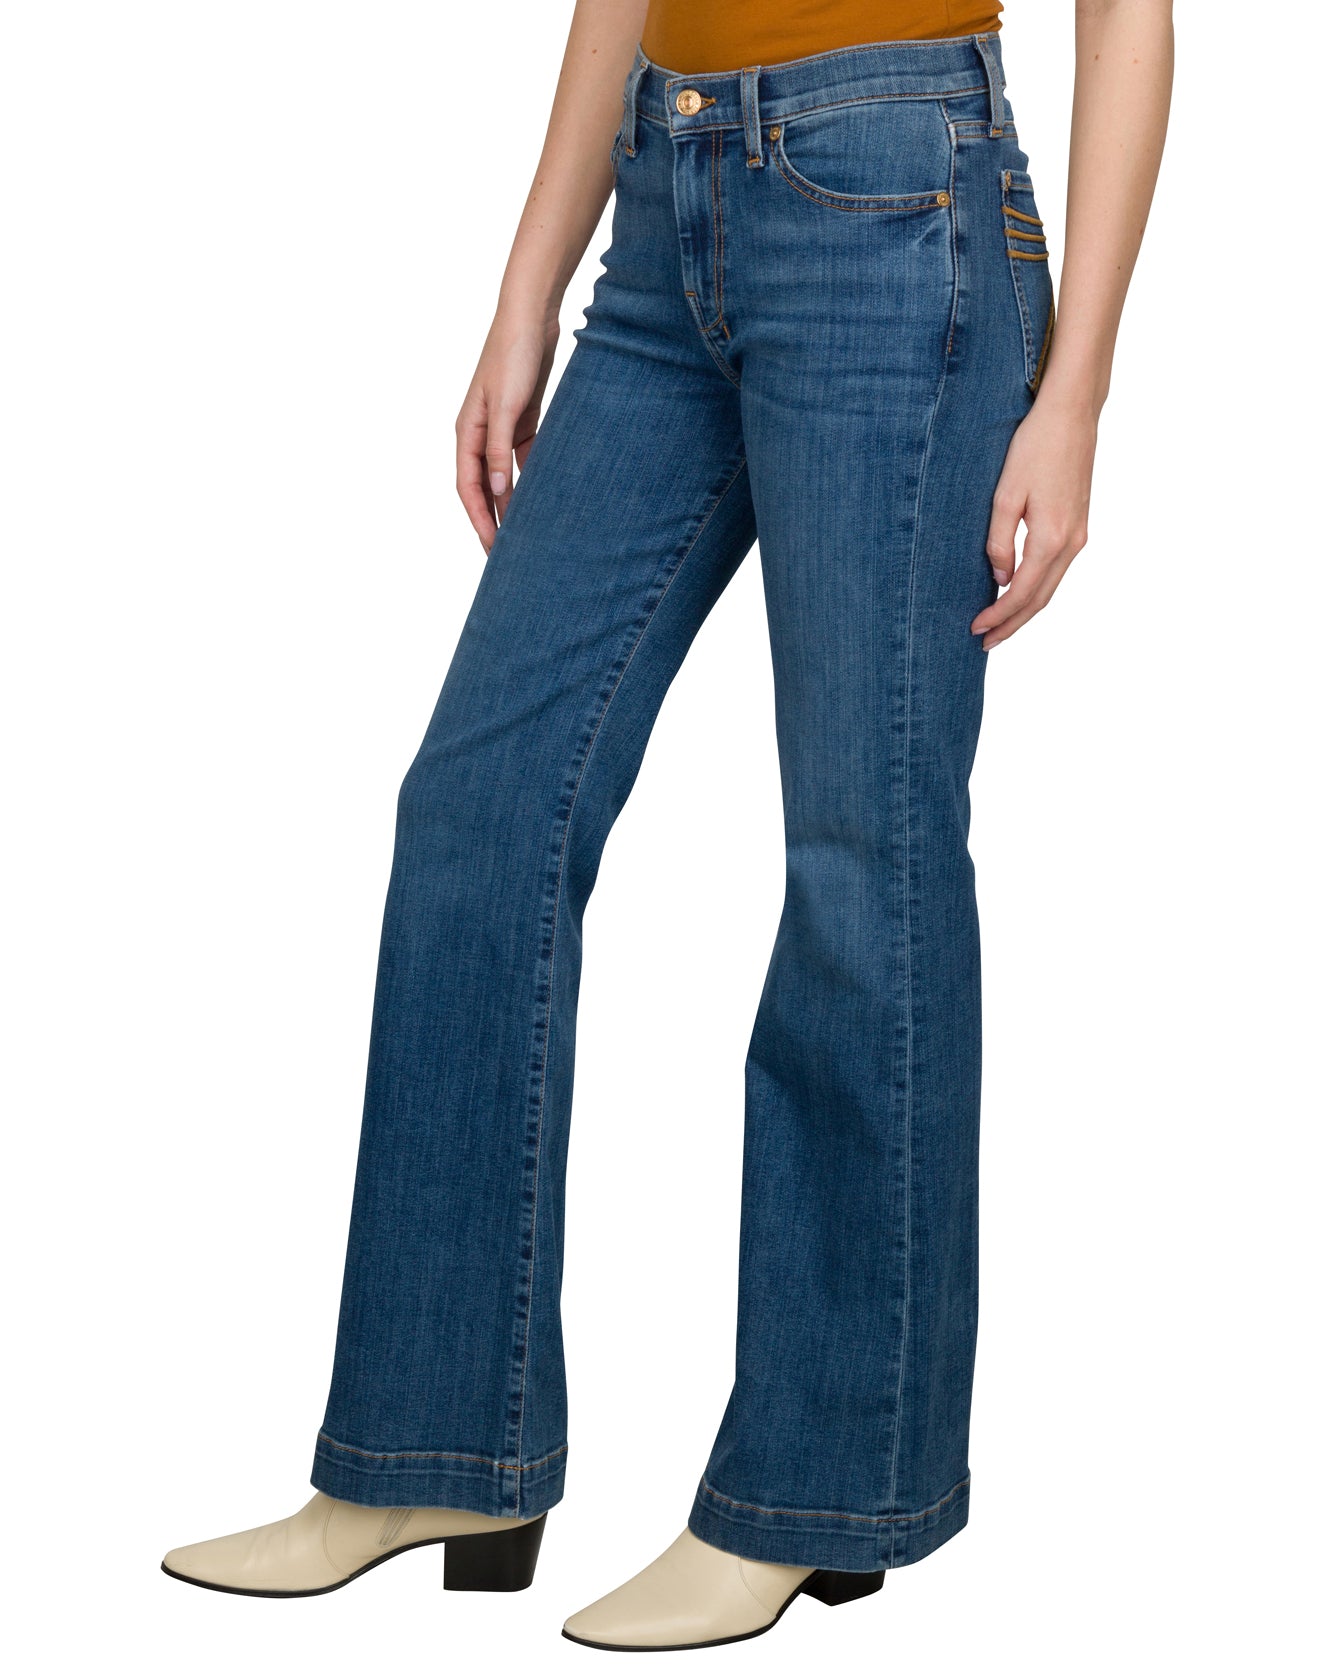 Dojo Tailorless Jeans